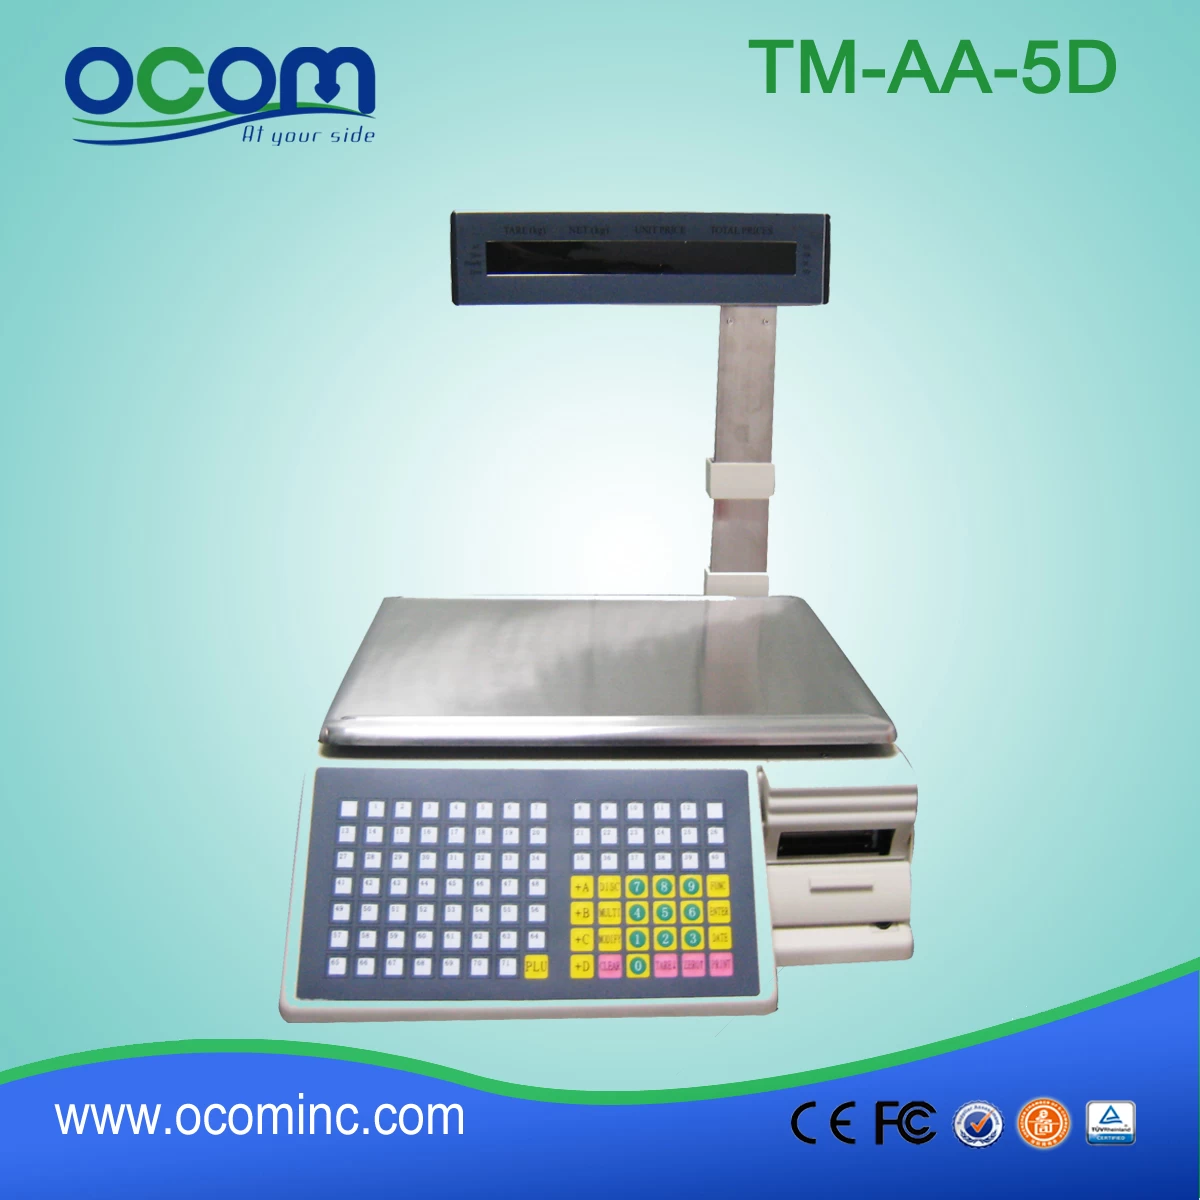 Platform weighing digital scale with price printing